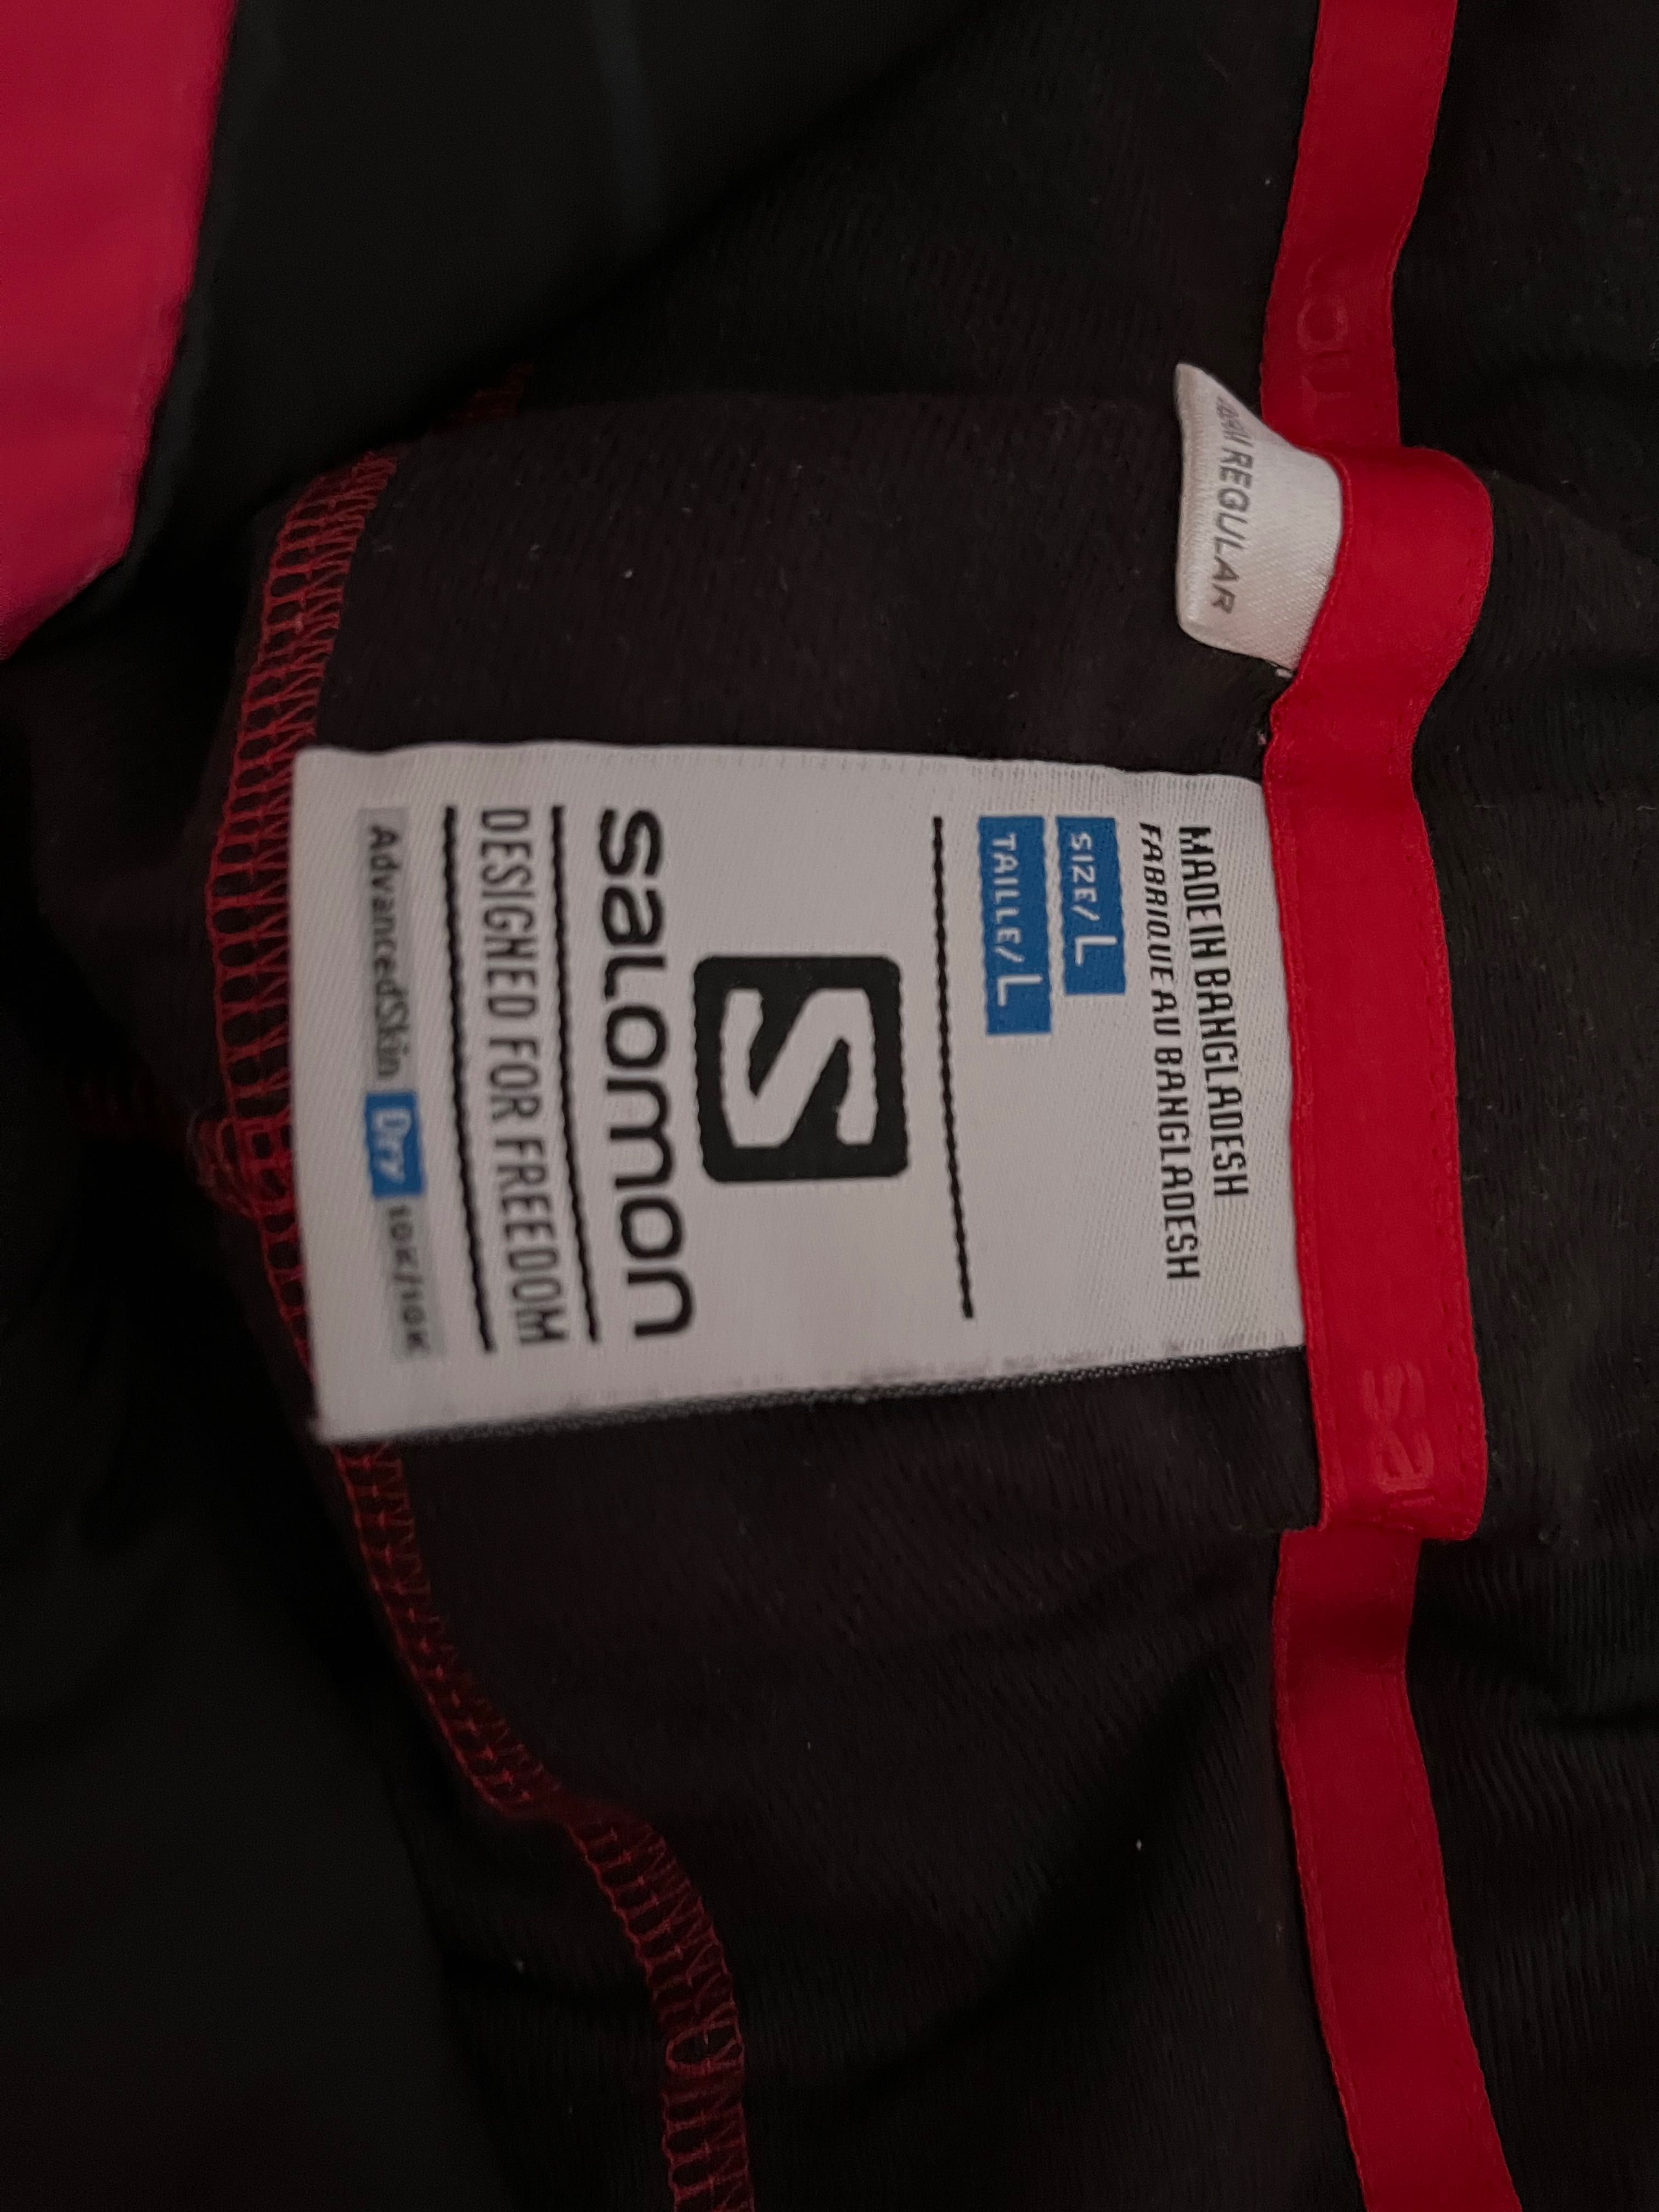 ЧИСТО НОВ ски панталони L размер - Roxy и Salomon 10К воден + якета